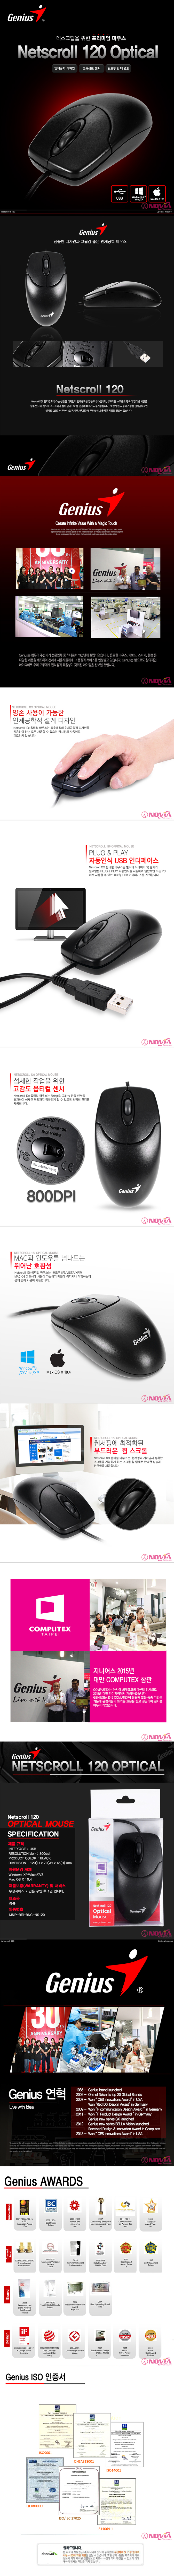 Genius netscroll 120 optical mouse.jpg